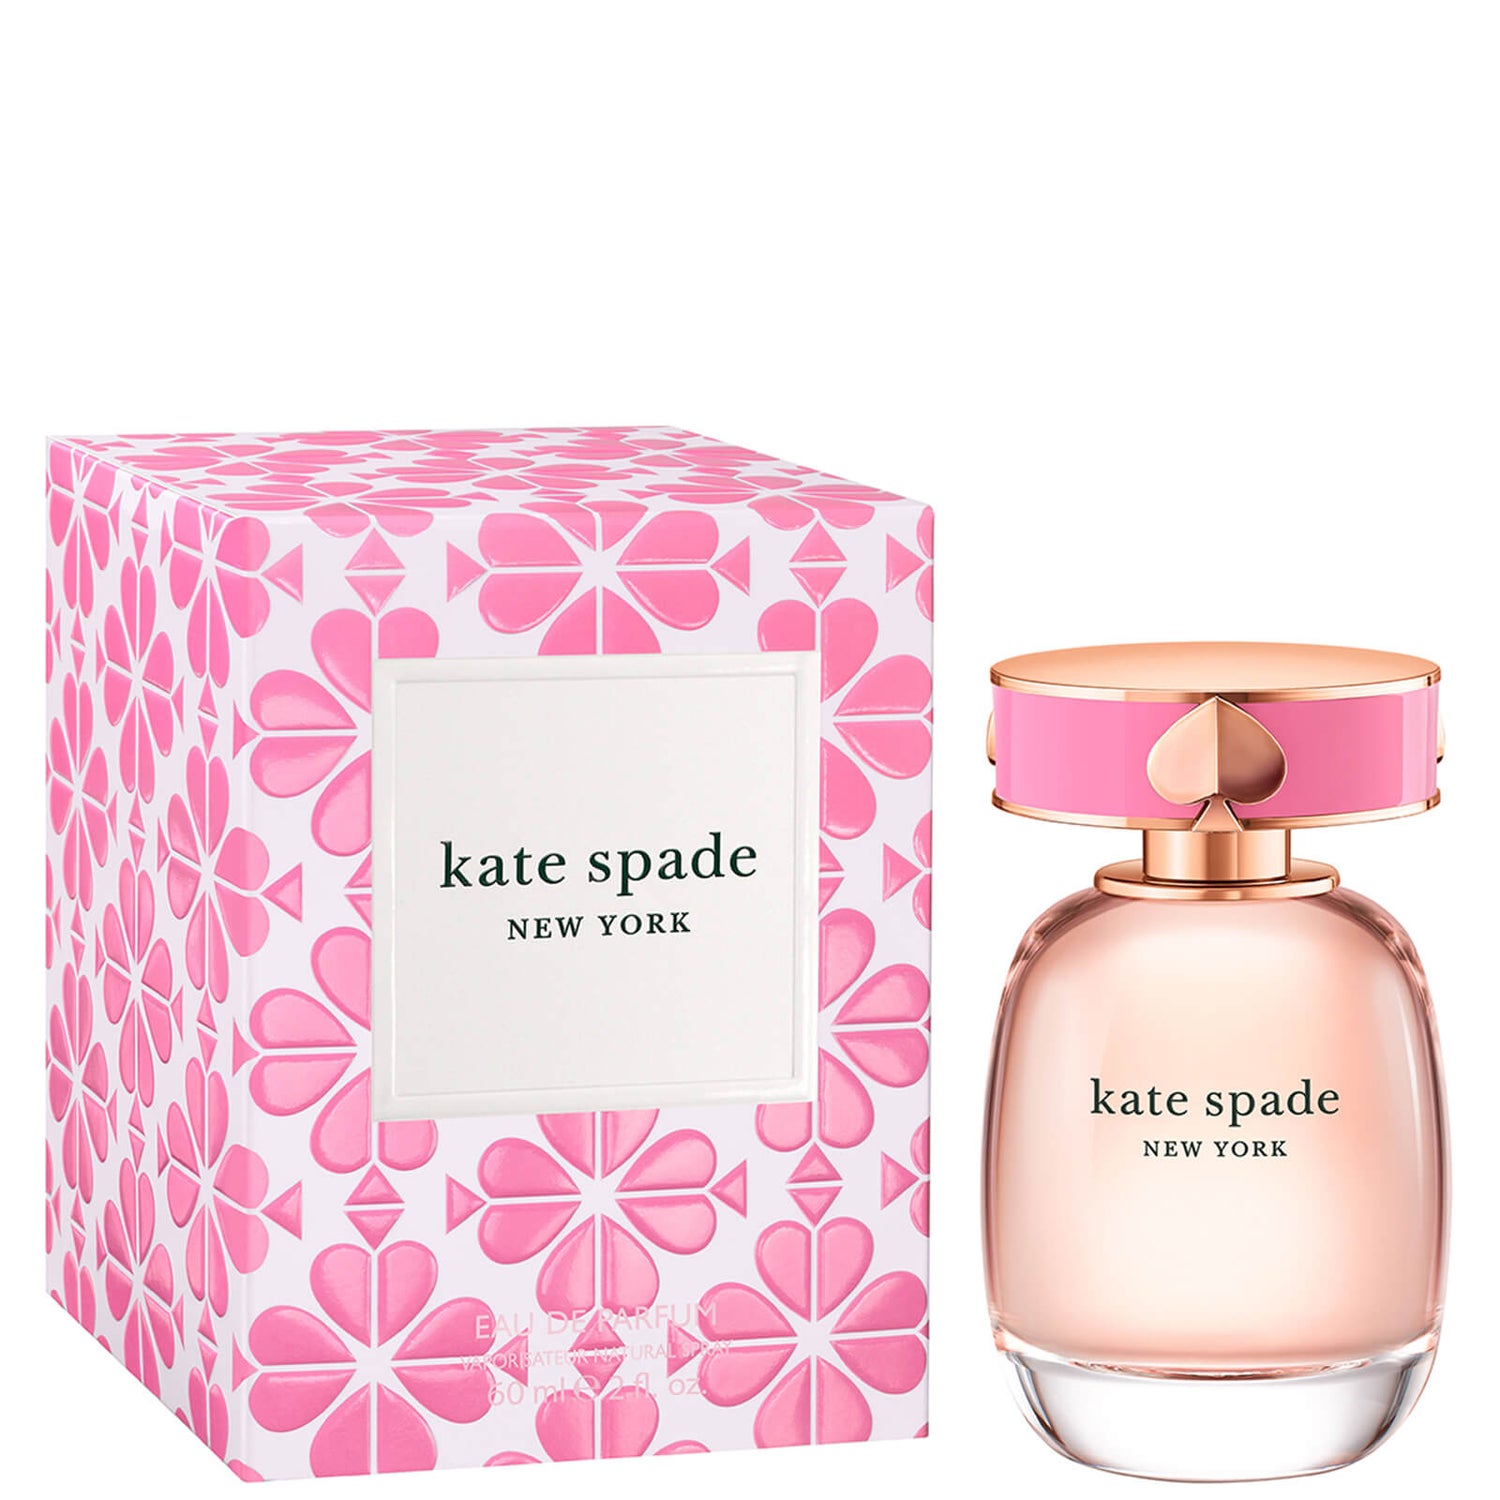 Kate Spade New York Eau de Parfum 60ml | Buy Online At RY